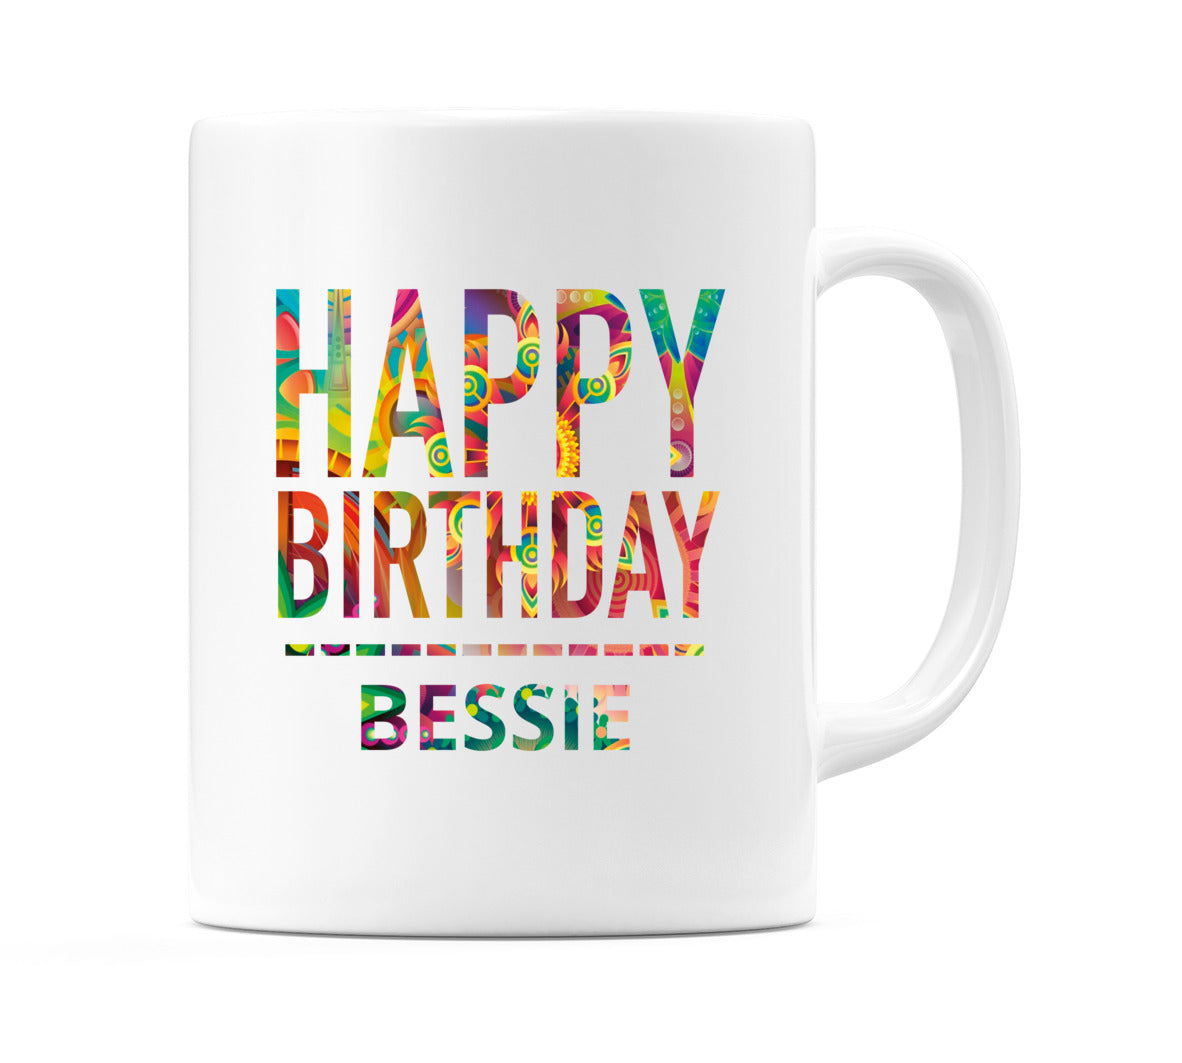 Happy Birthday Bessie (Tie Dye Effect) Mug Cup by WeDoMugs